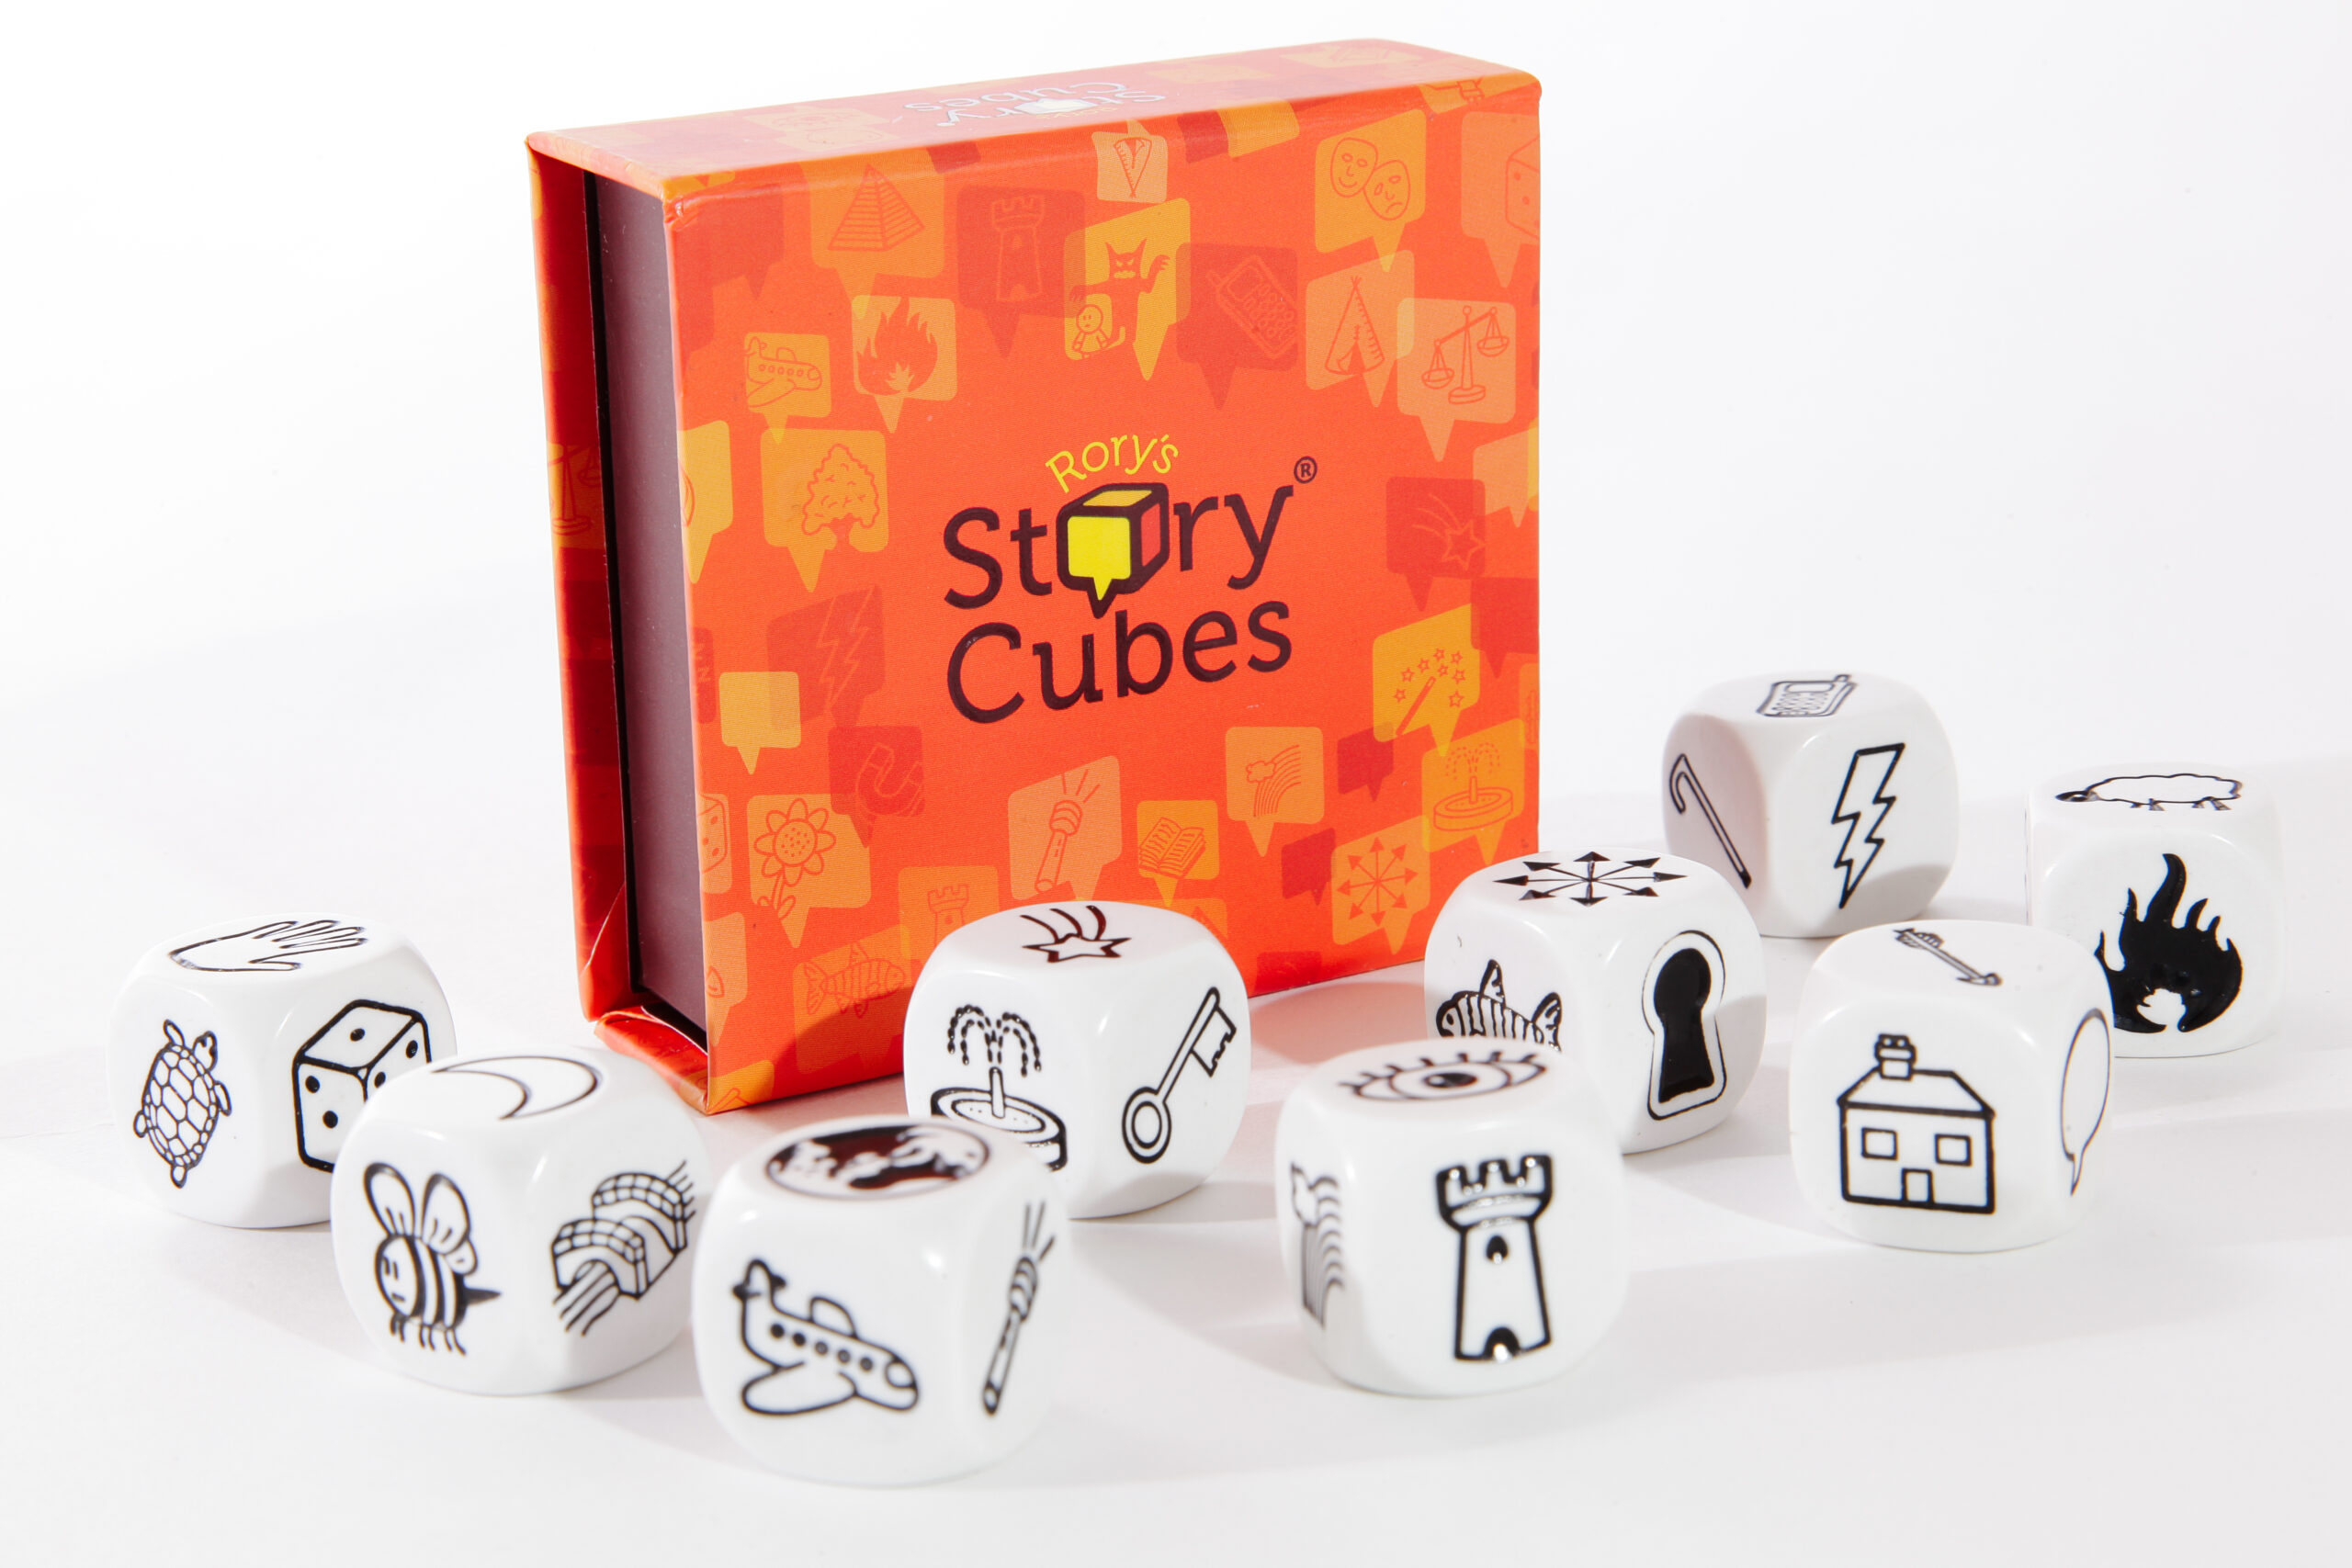 Rory's Story Cubes Original Orange